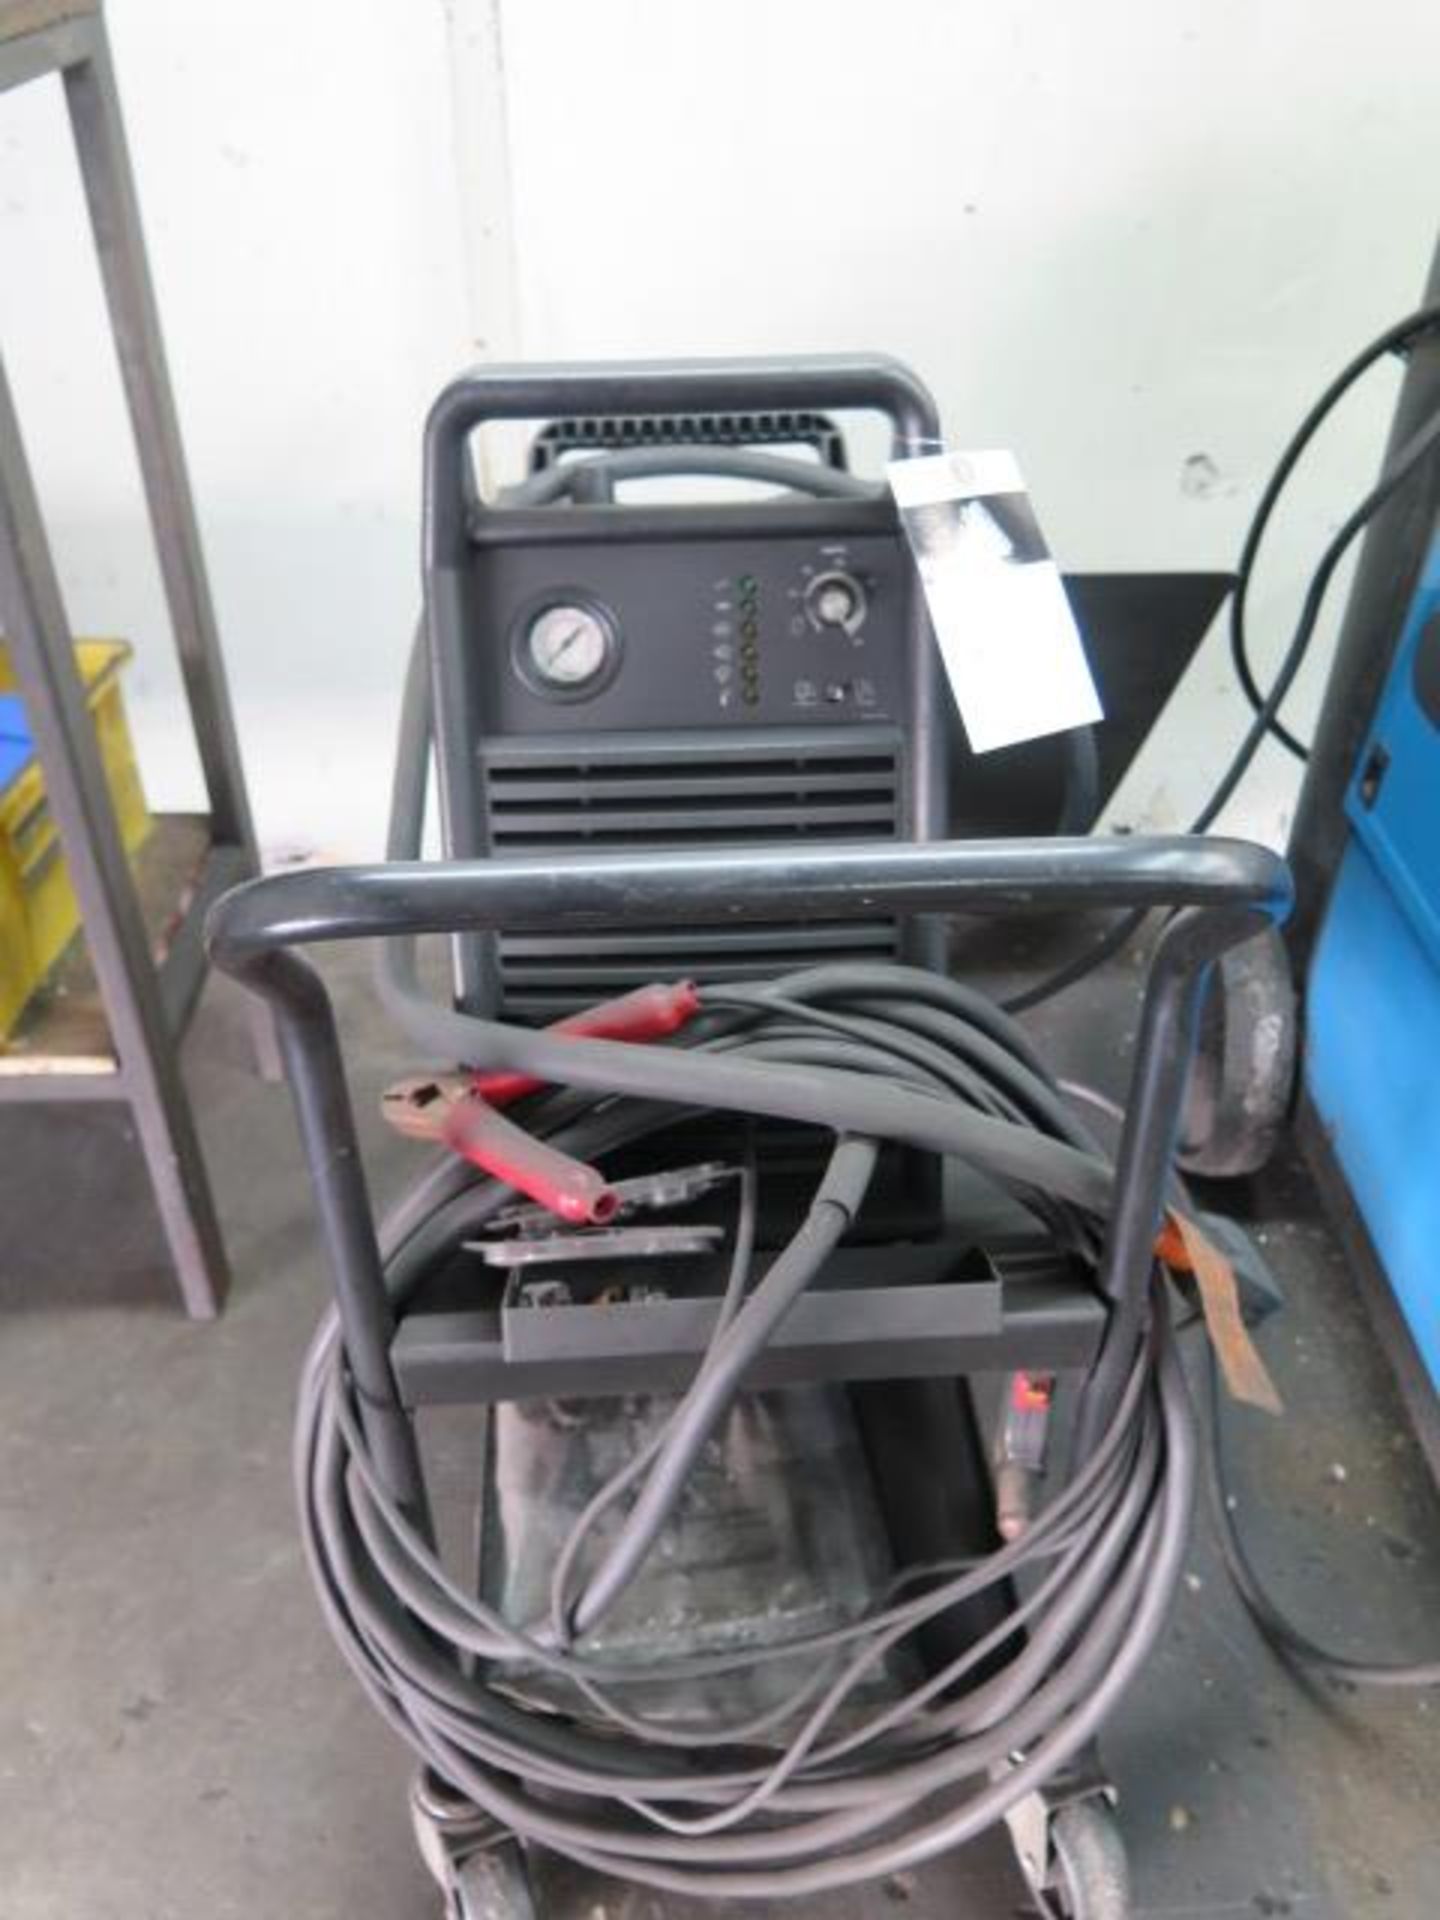 Hypertherm Powermax 600 Plasma Cutting Power Source w/ Cart (SOLD AS-IS - NO WARRANTY)